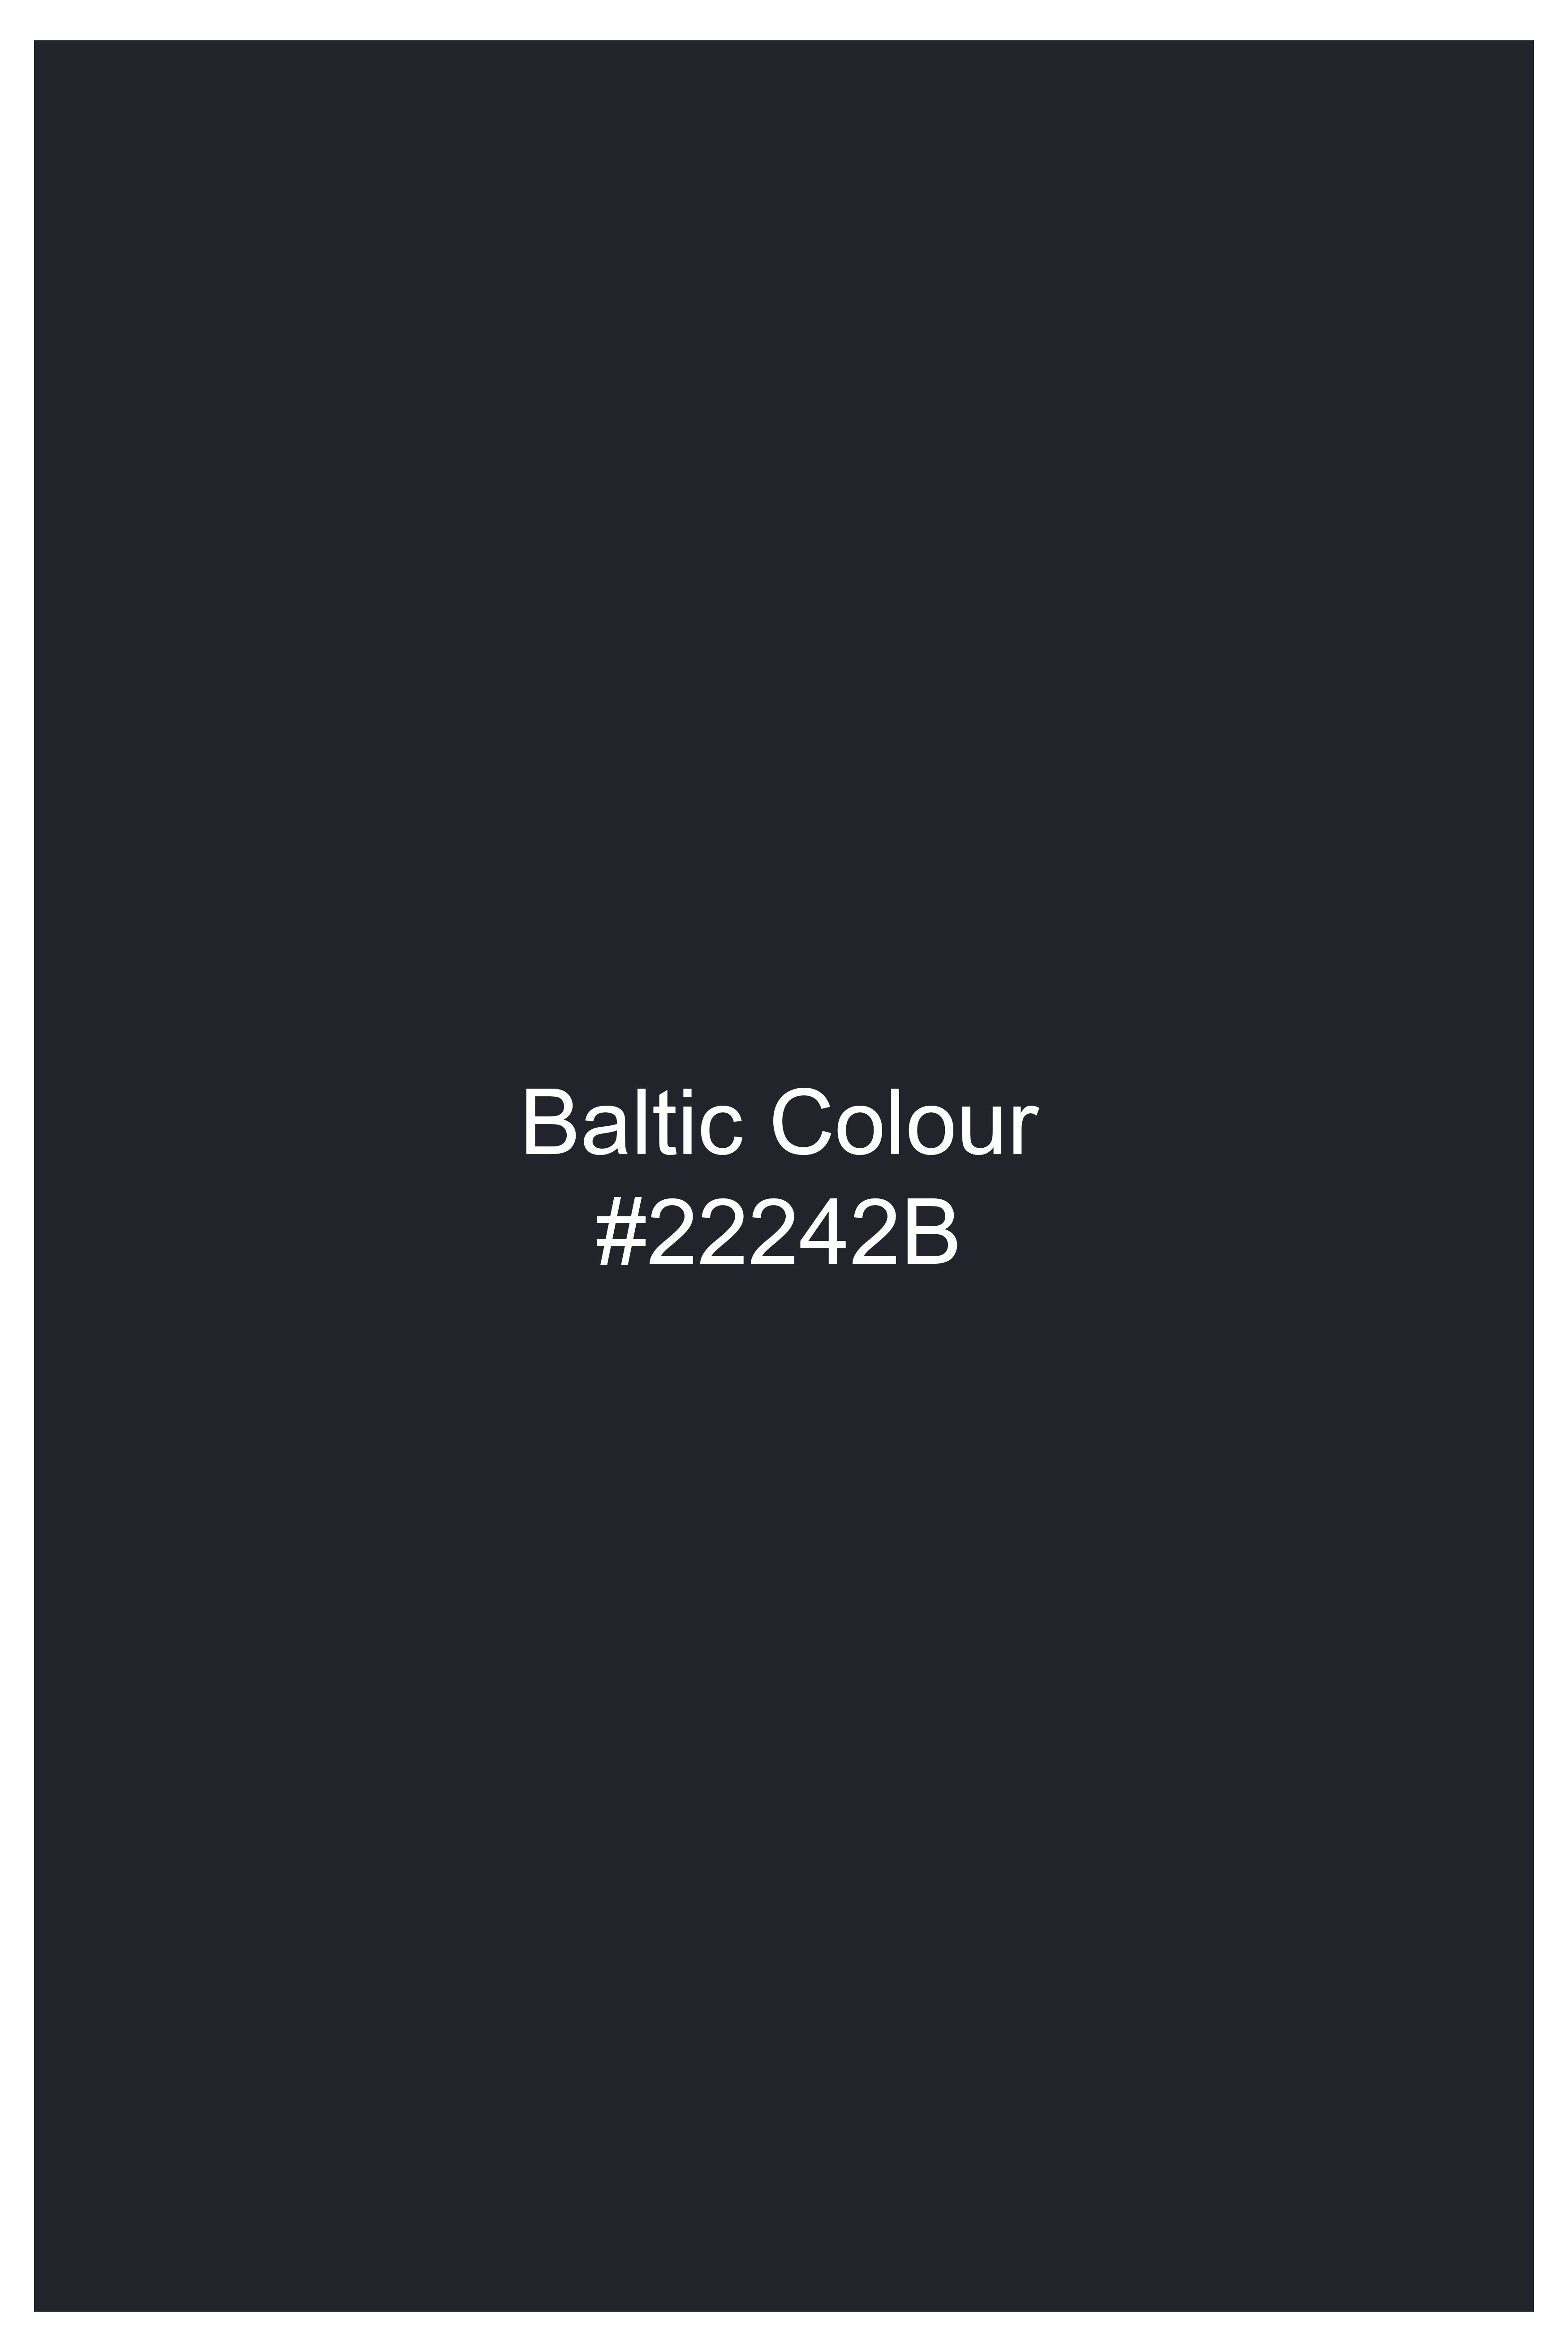 Baltic Blue Subtle Checkered Cross Buttoned Bandhgala Wool Rich Blazer BL3098-CBG-36, BL3098-CBG-38, BL3098-CBG-40, BL3098-CBG-42, BL3098-CBG-44, BL3098-CBG-46, BL3098-CBG-48, BL3098-CBG-50, BL3098-CBG-52, BL3098-CBG-54, BL3098-CBG-56, BL3098-CBG-58, BL3098-CBG-60